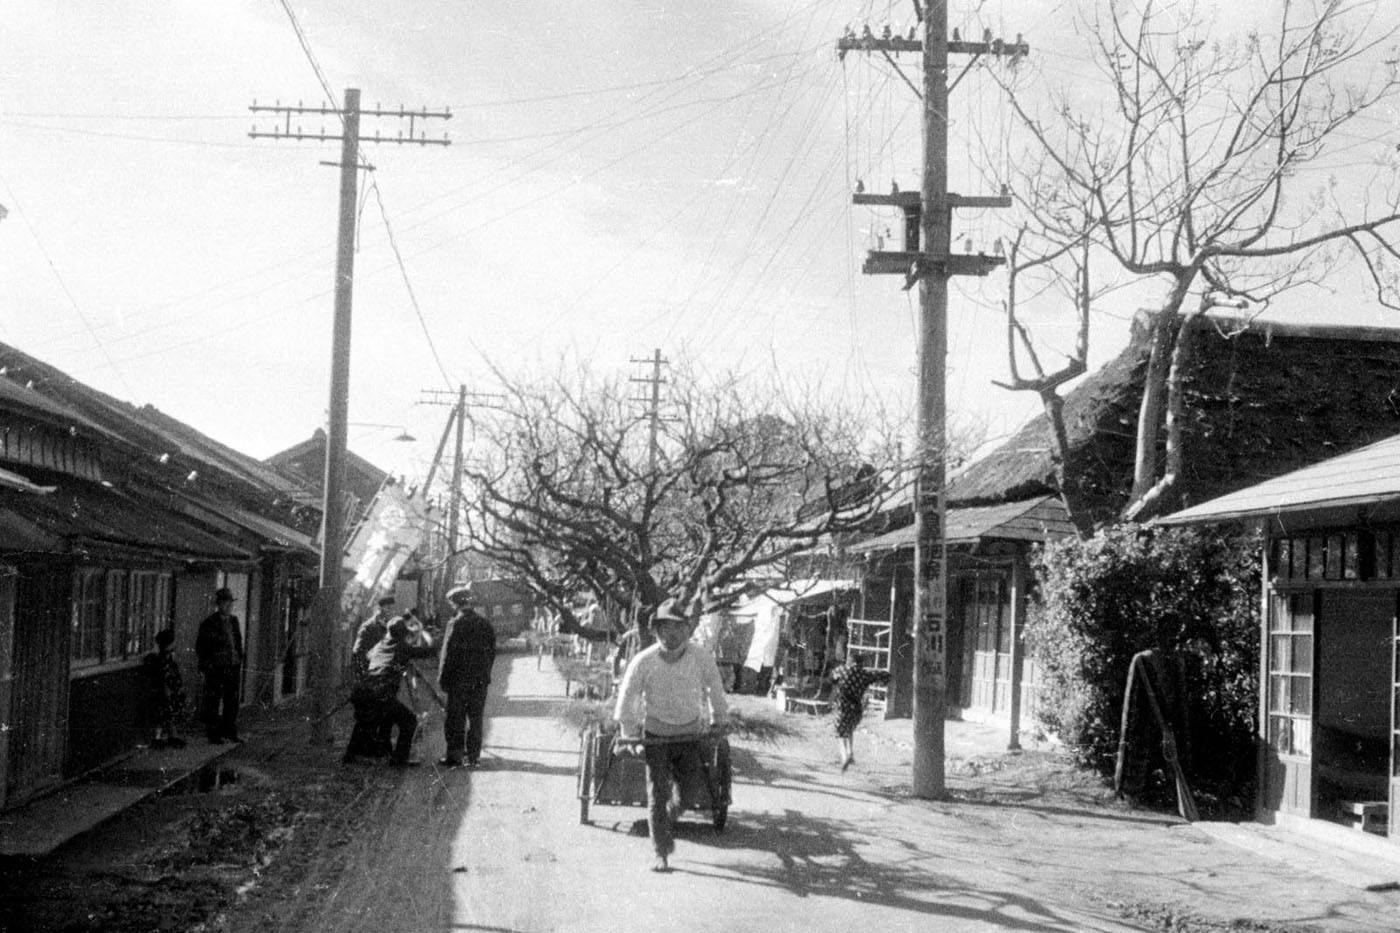 Киногруппа снимает на улицах старого Токио. Фото из архива Алексея Трояновского (сына М.А. Трояновского).